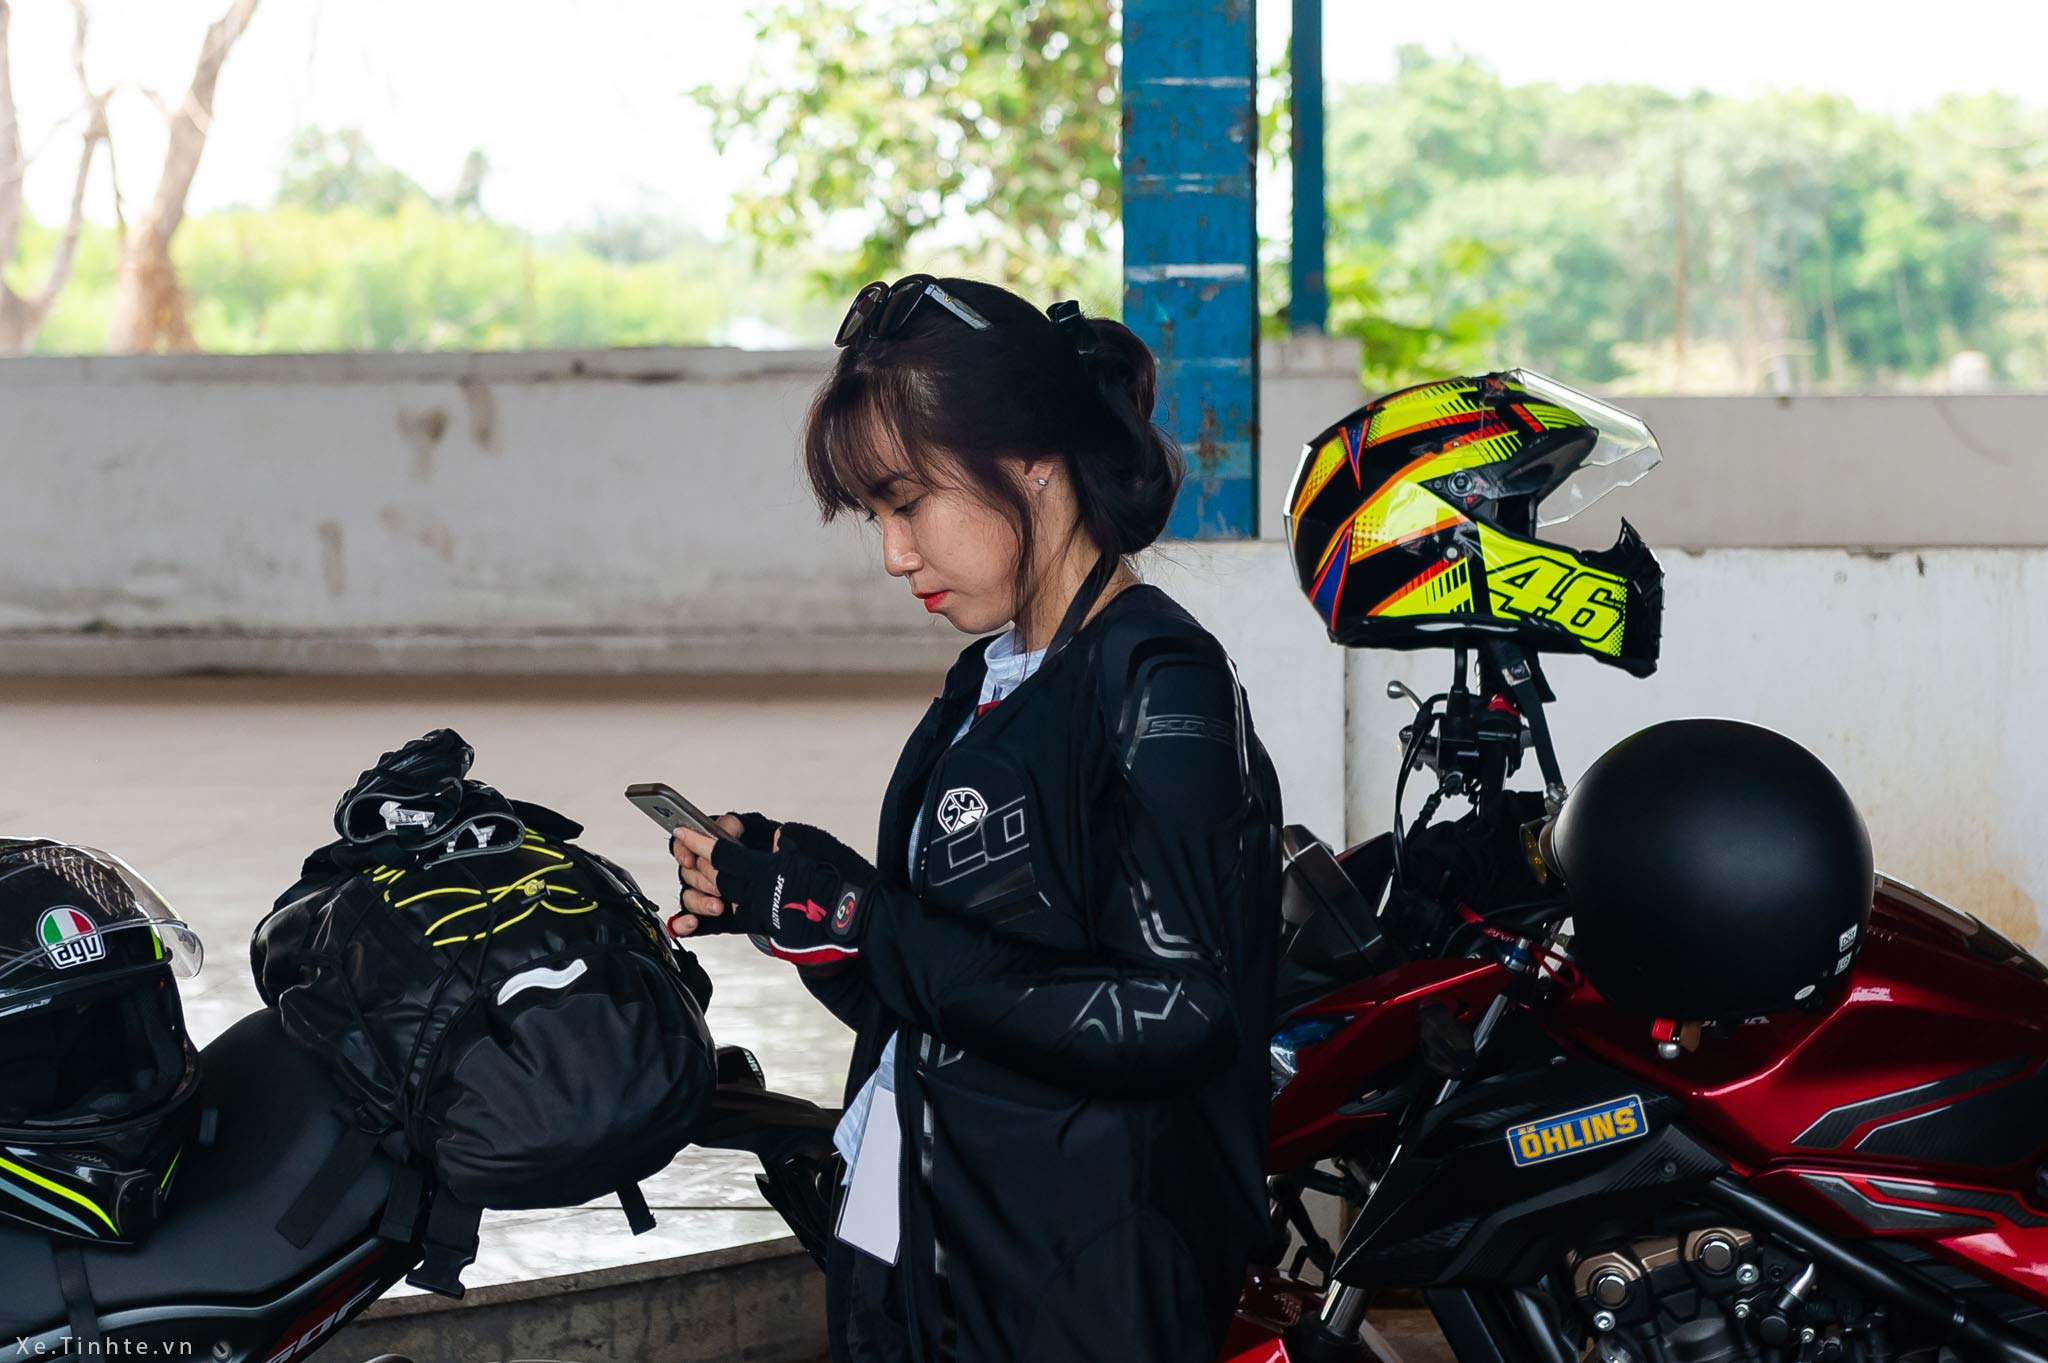 Honda_biker_day_2019_Saigon_Phanthiet (51).jpg